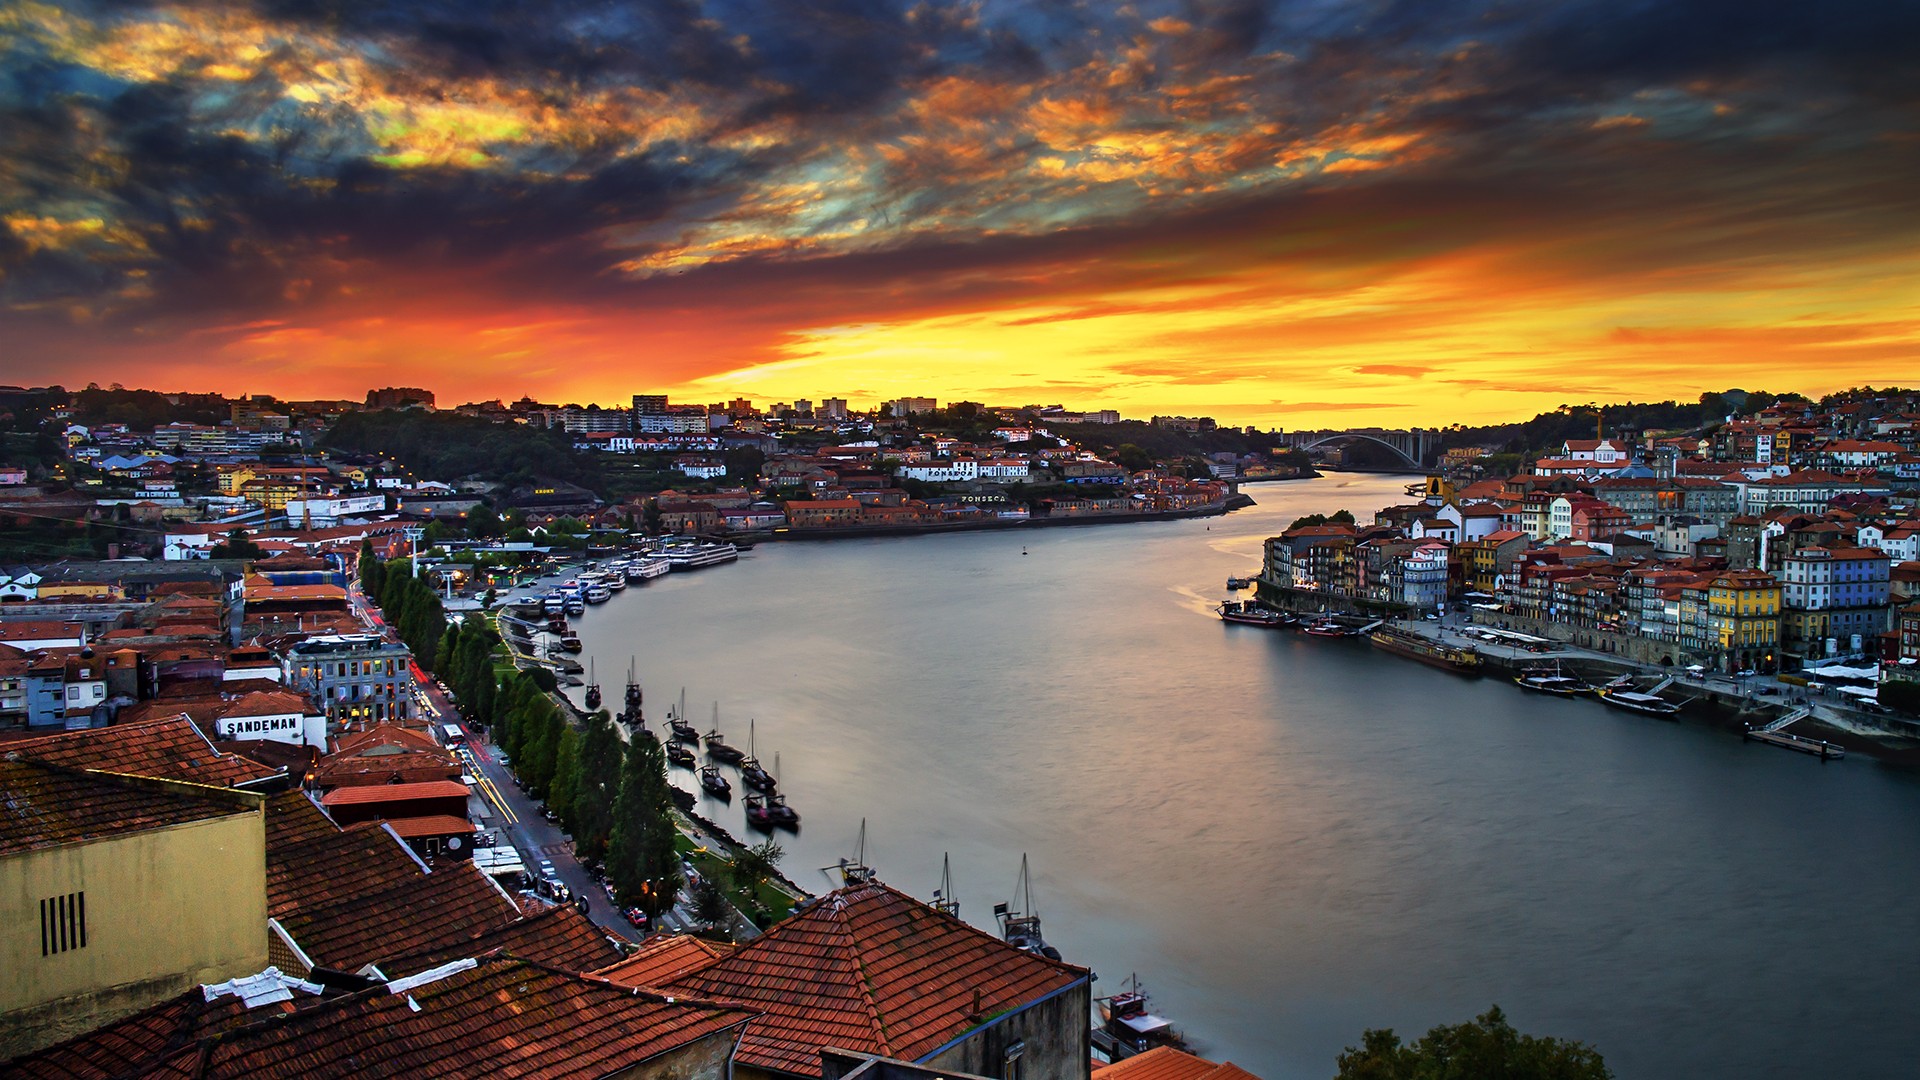 General 1920x1080 Portugal Porto house river sunset bridge boat overcast cityscape orange sky sky clouds